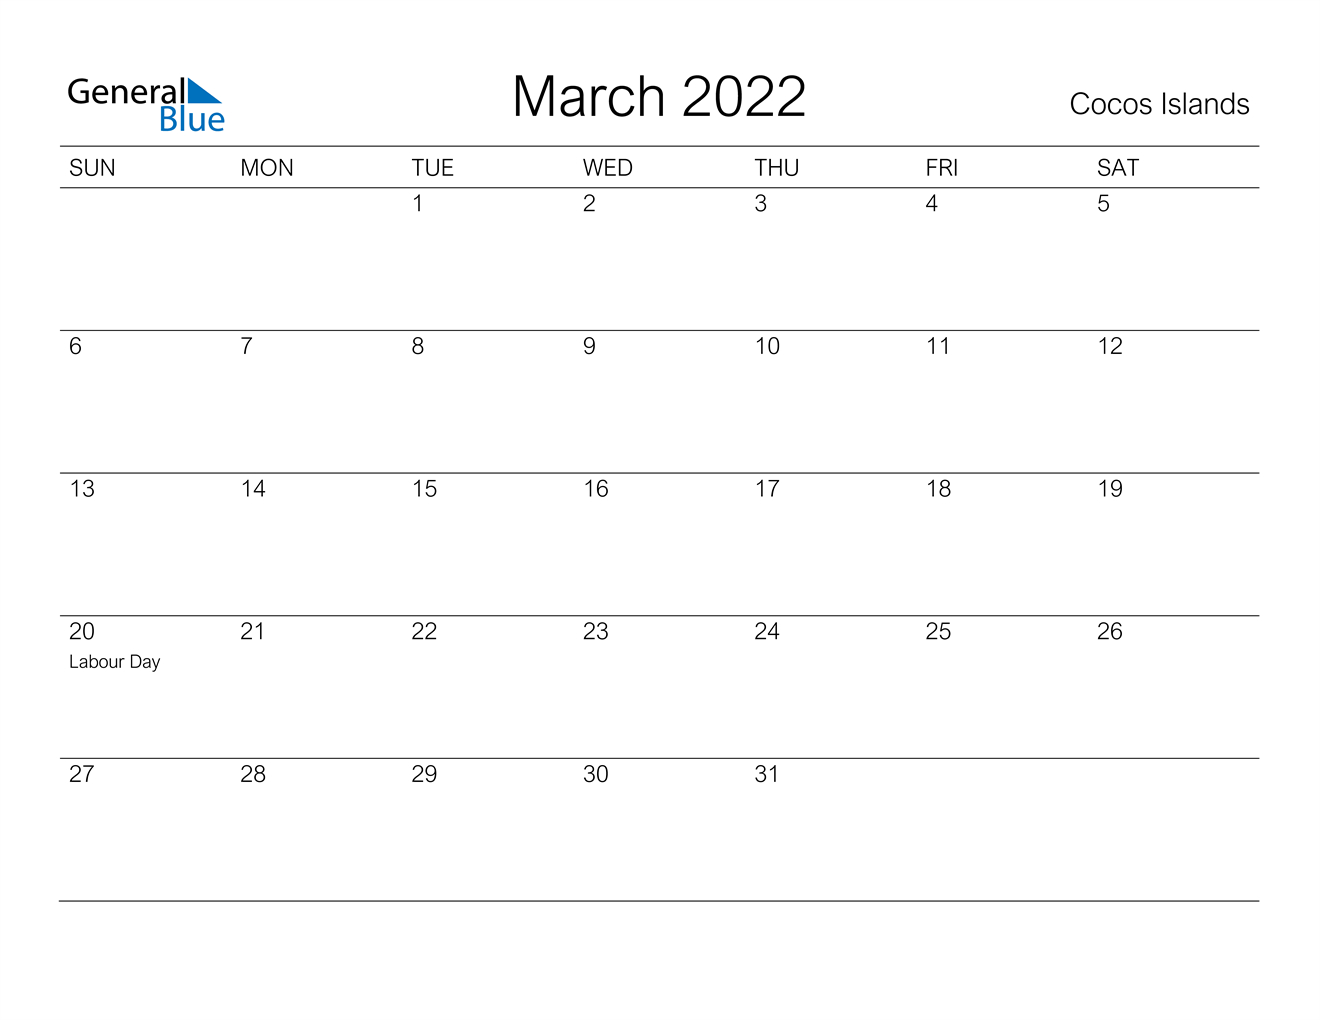 Get March 2022 Tithi Calendar